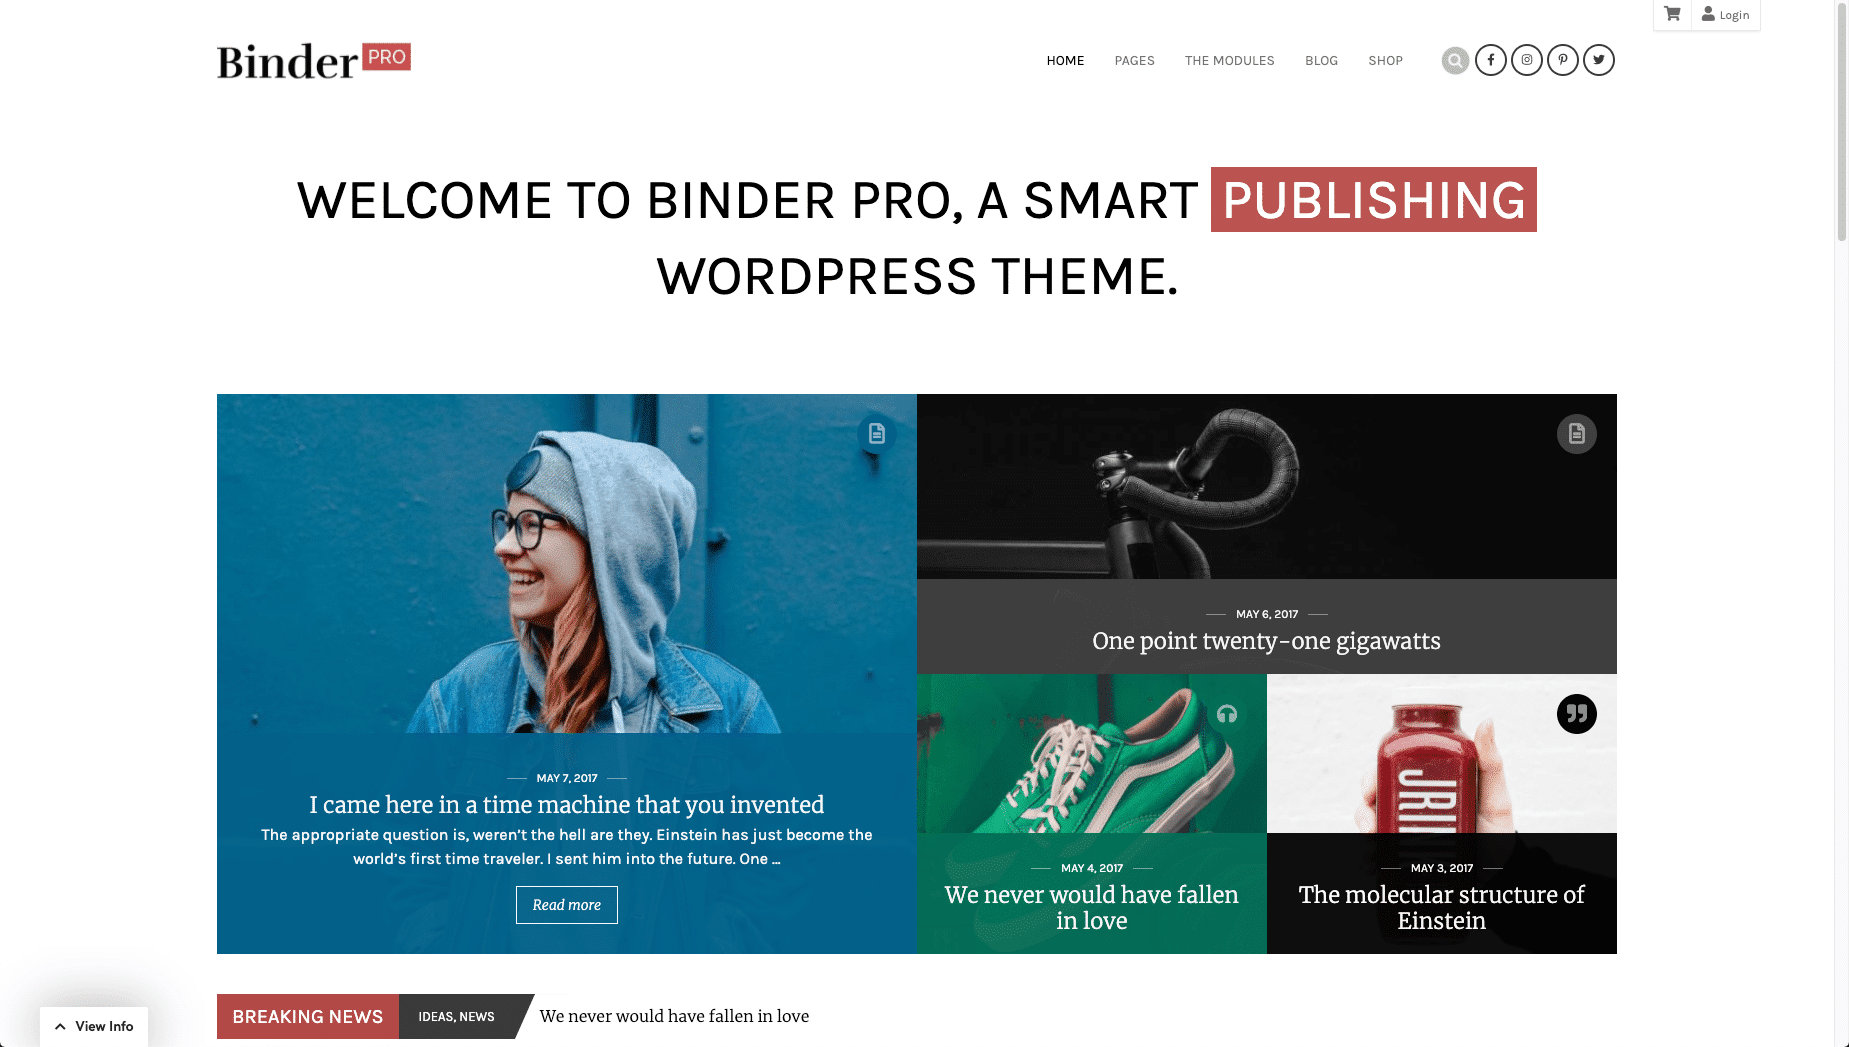 Binder Pro